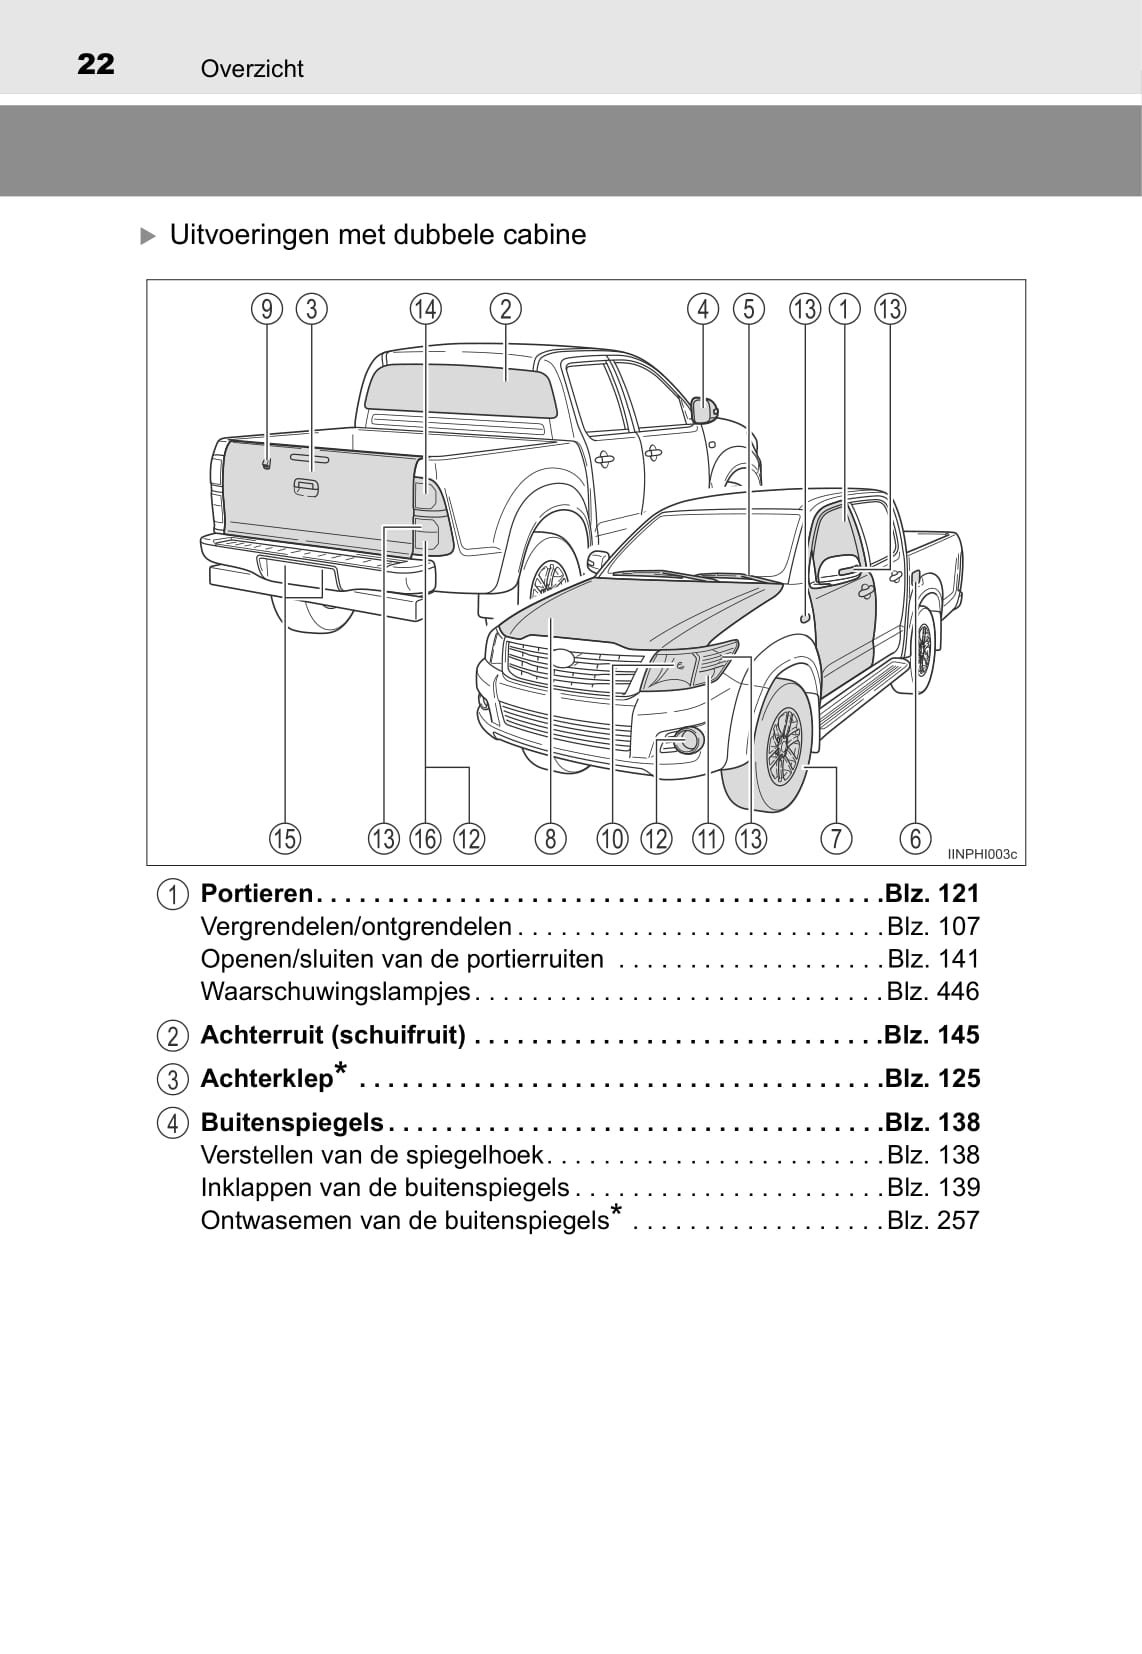 2013-2014 Toyota Hilux Gebruikershandleiding | Nederlands